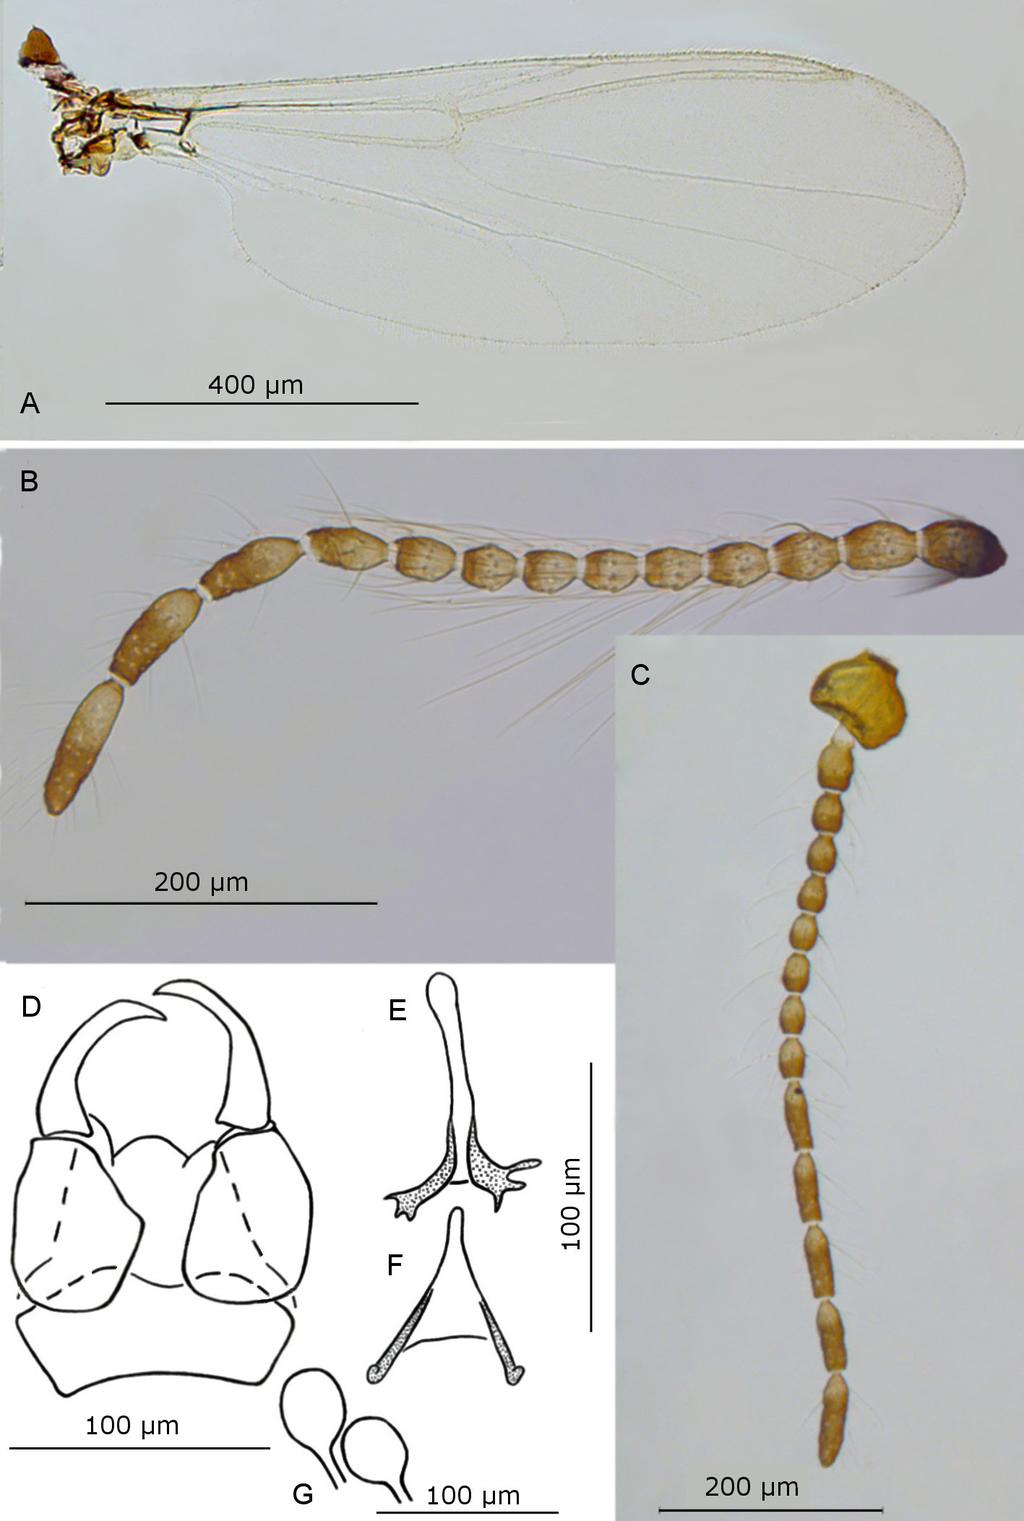 ALWIN-KOWNACKA A. et al., Palpomyiini and Sphaeromiini biting midges from the Middle East Fig. 2.